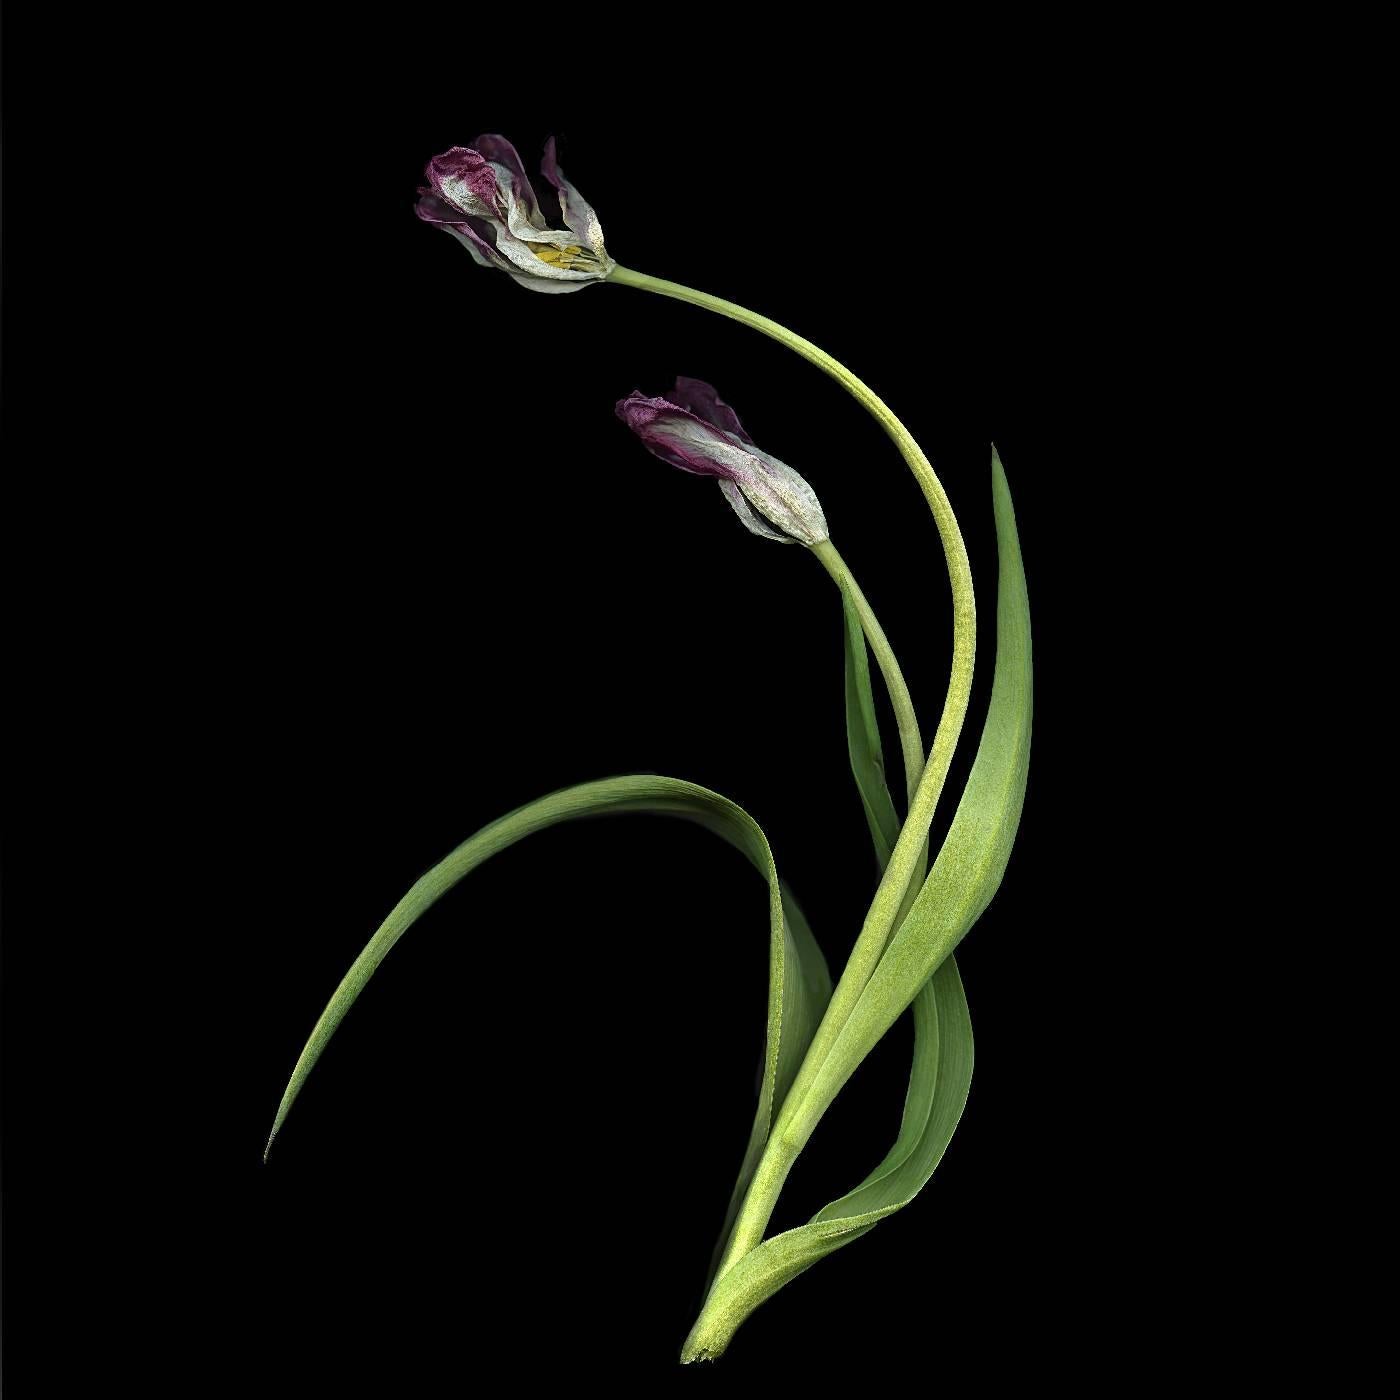 Jerry Freedner Still-Life Photograph - Tulip 1 (Pink & Green Floral Still Life Photograph on Black Background)